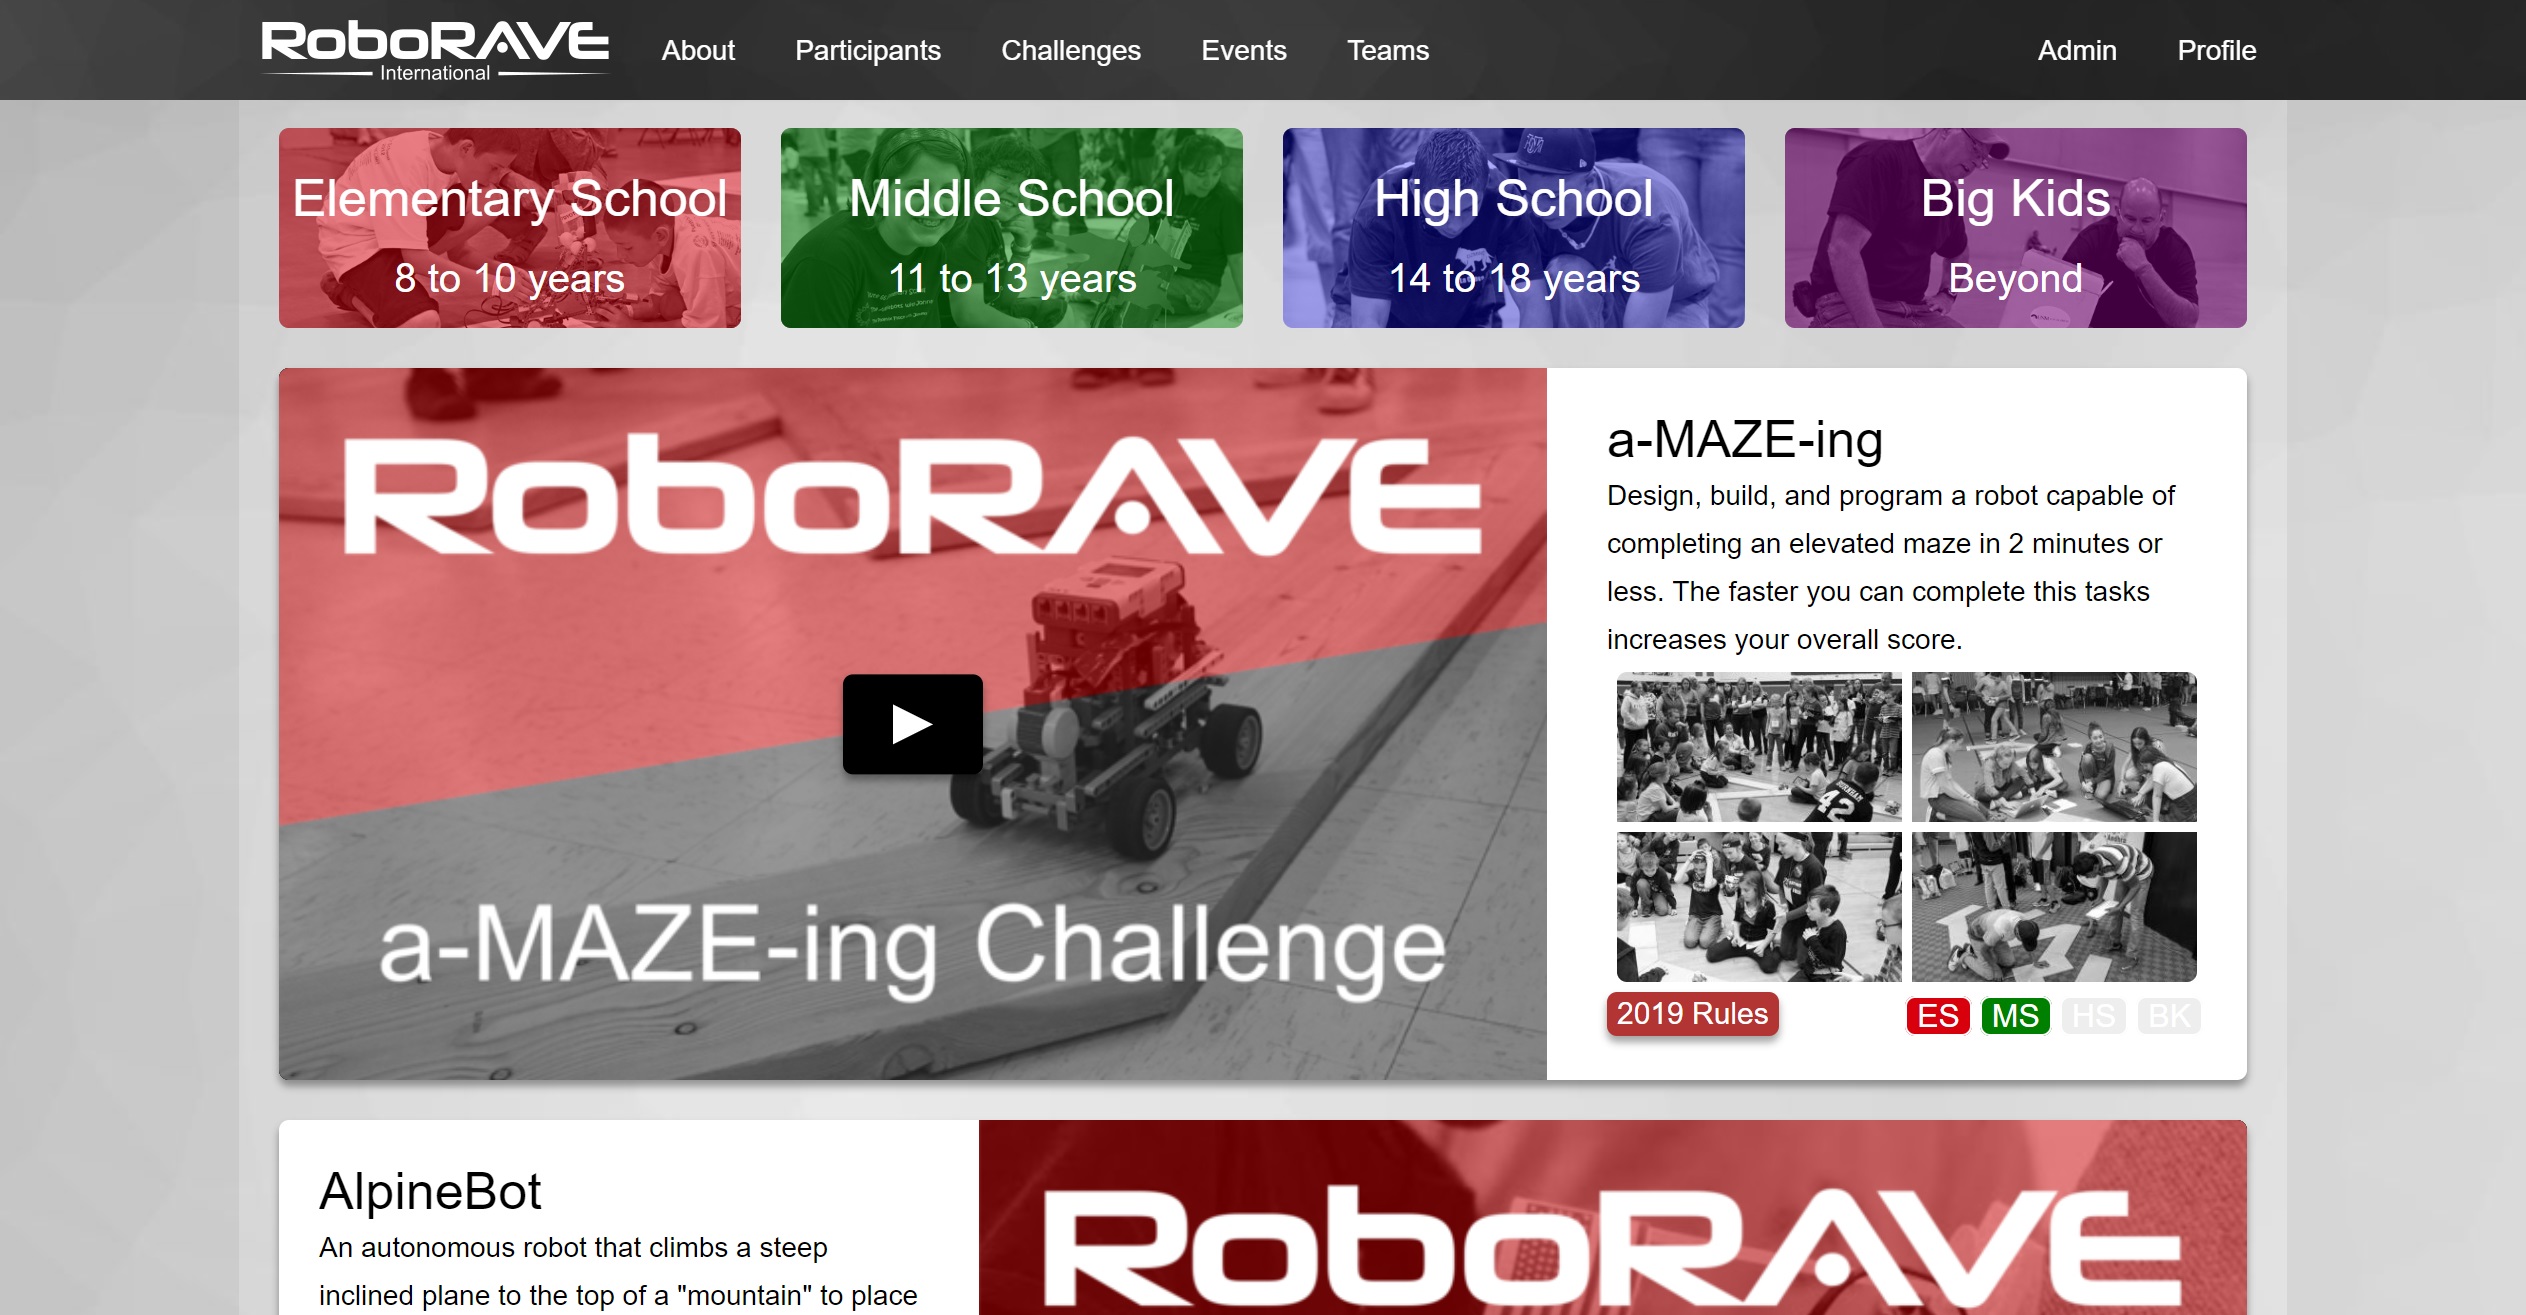 RoboRAVE Challenges